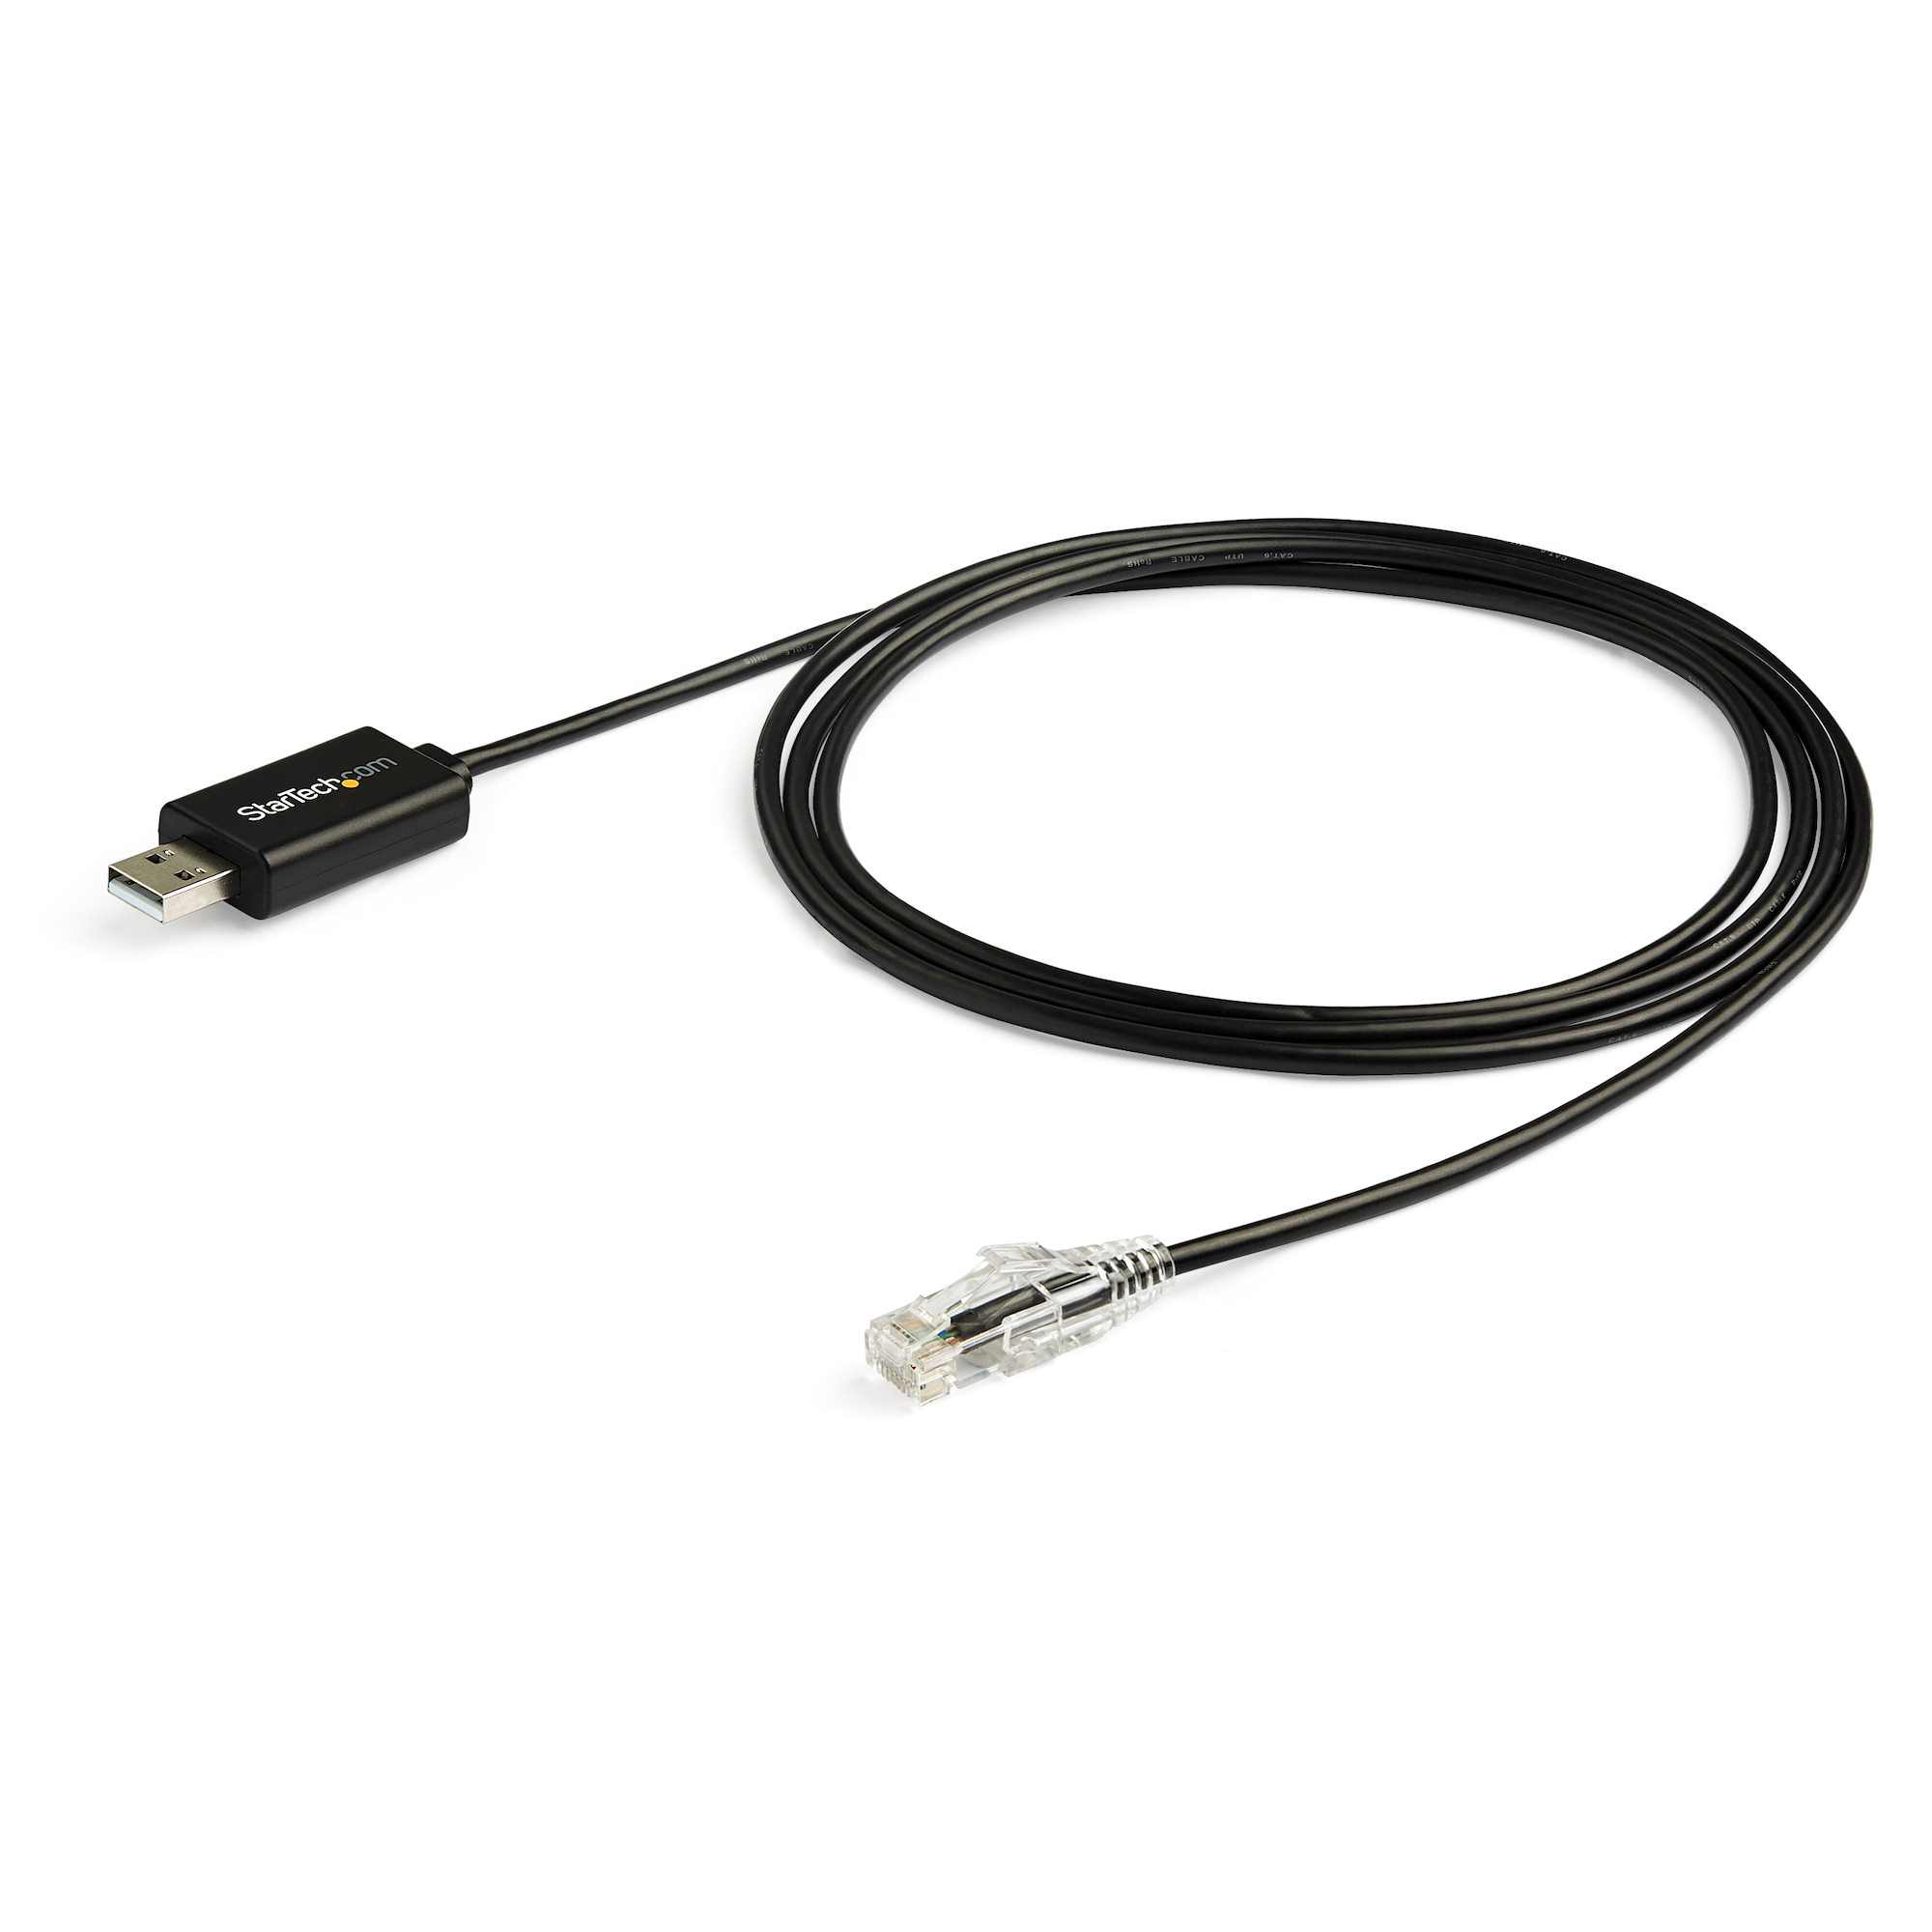 Cable - Cisco USB Console Cable 460Kbps T1 Cables & Router Cables | StarTech.com Germany